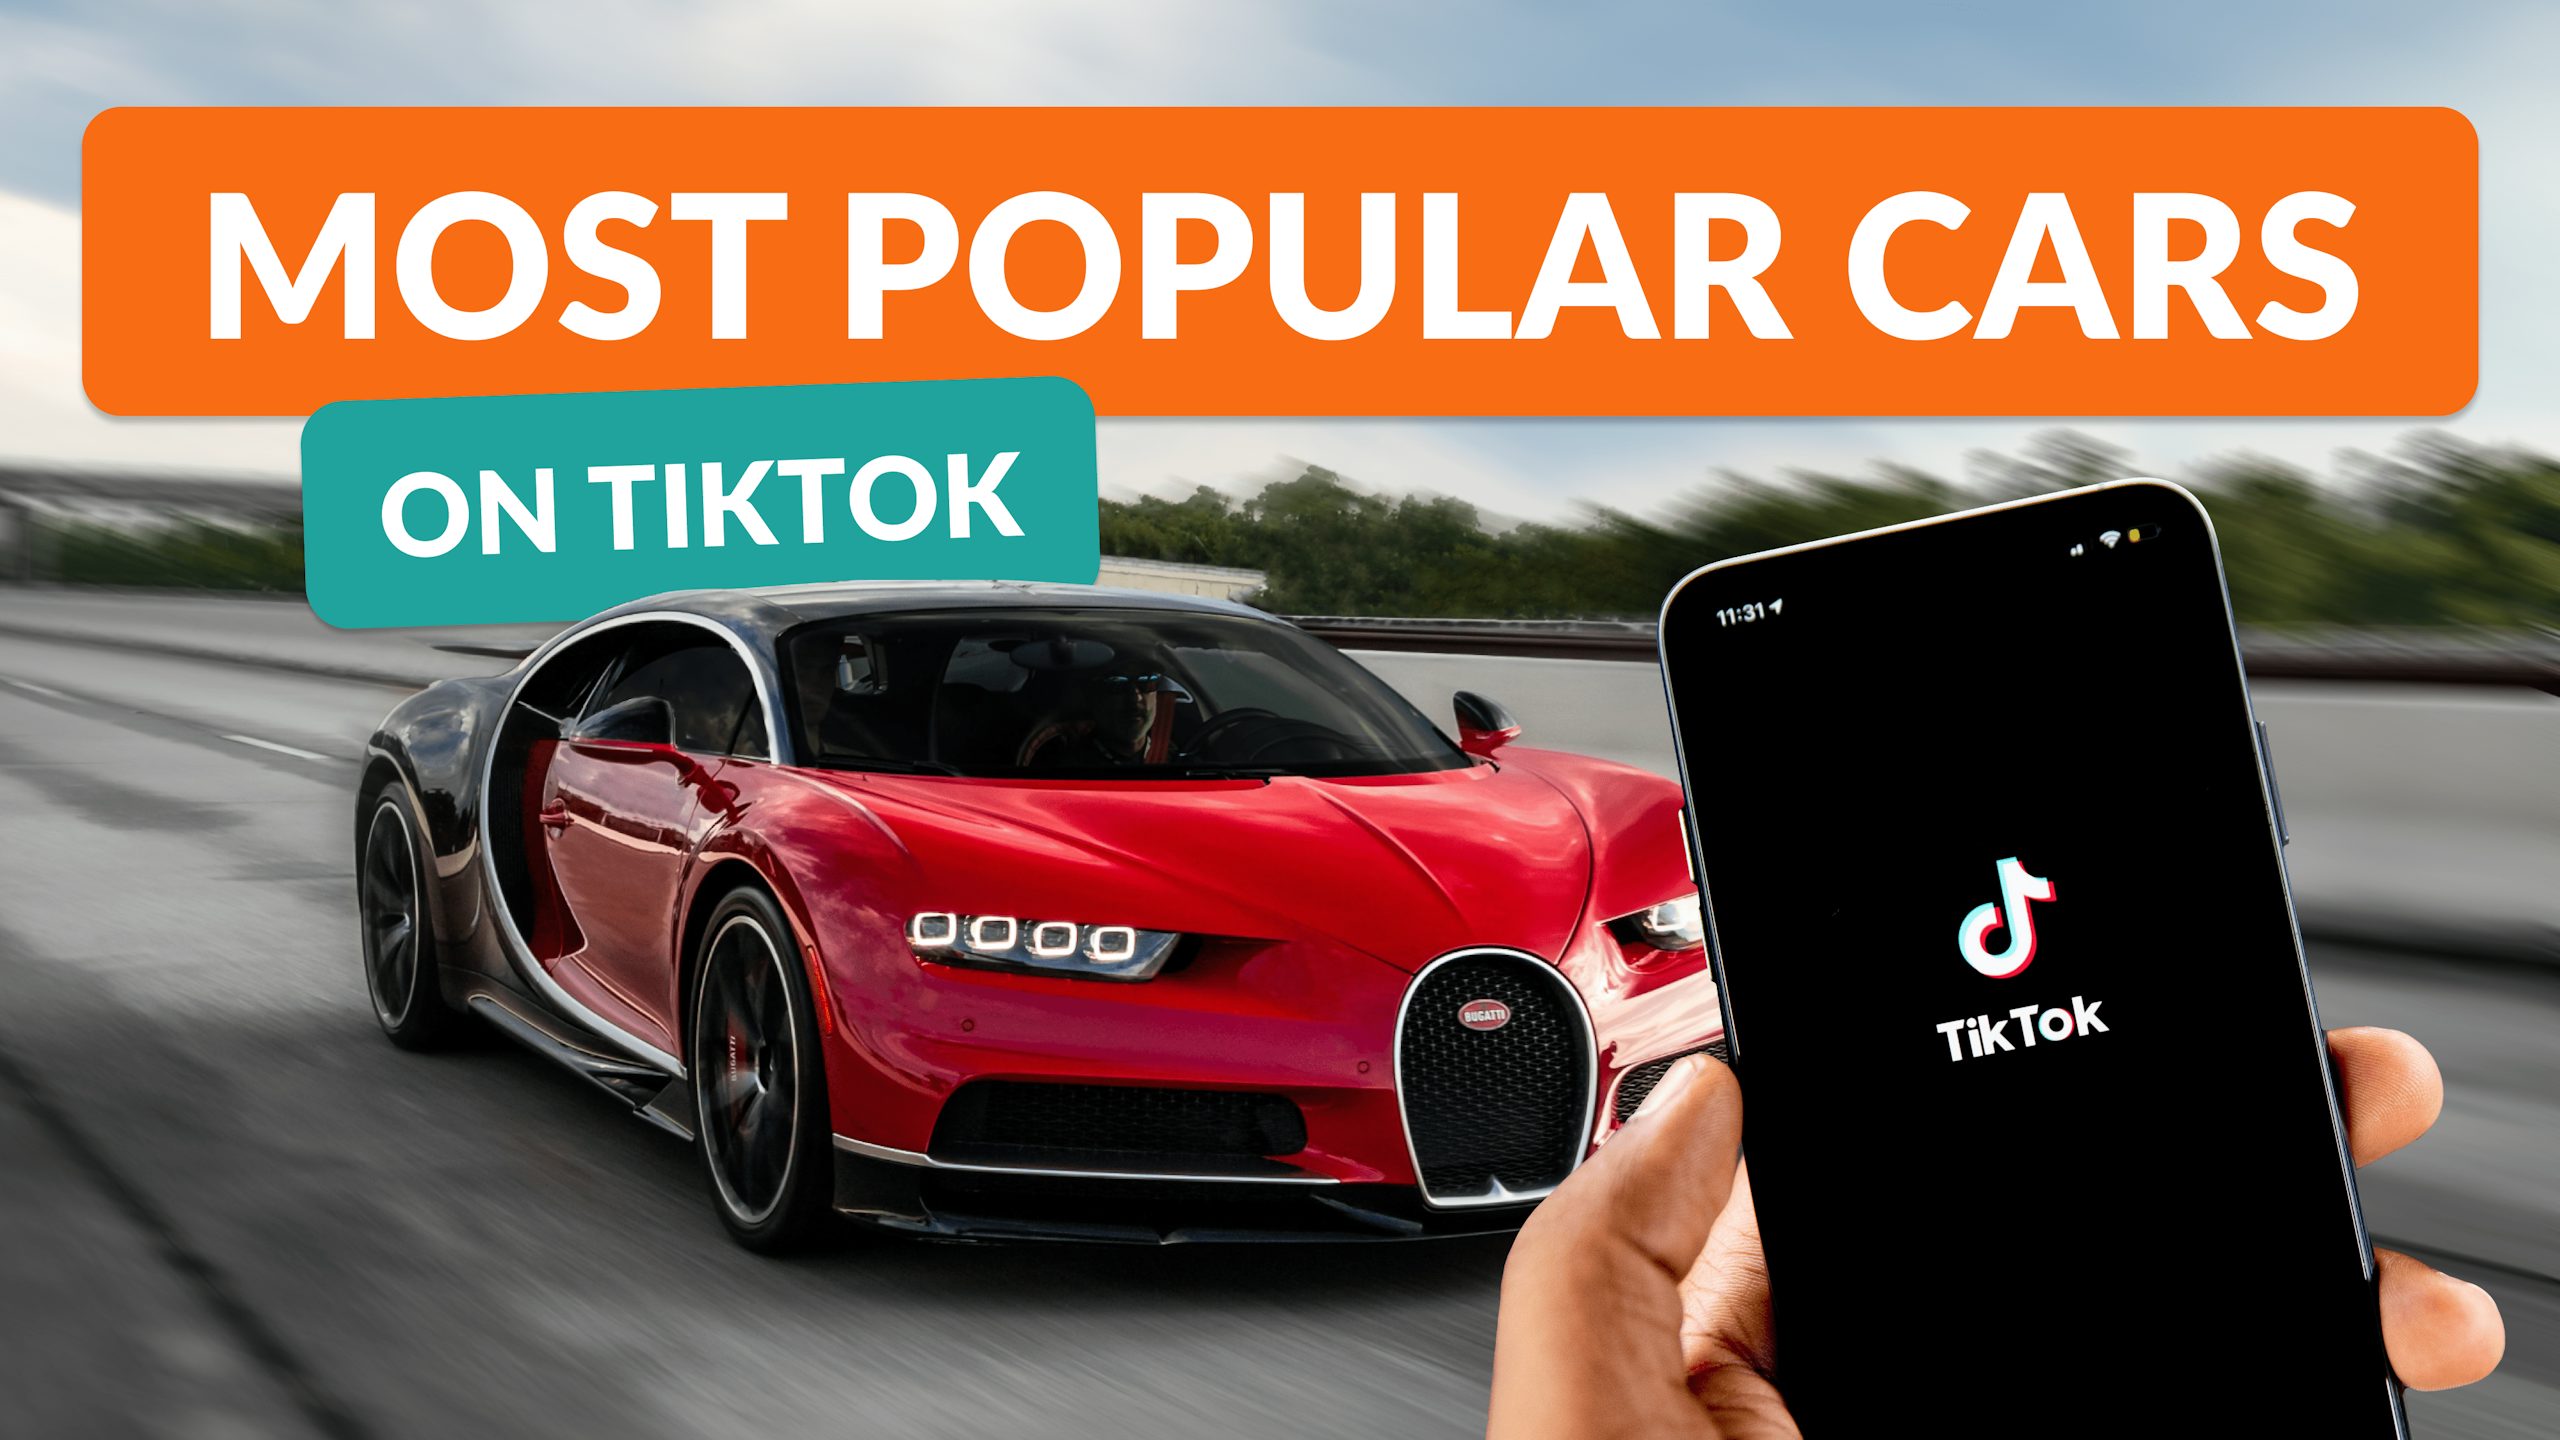 Most popular cars on TikTok